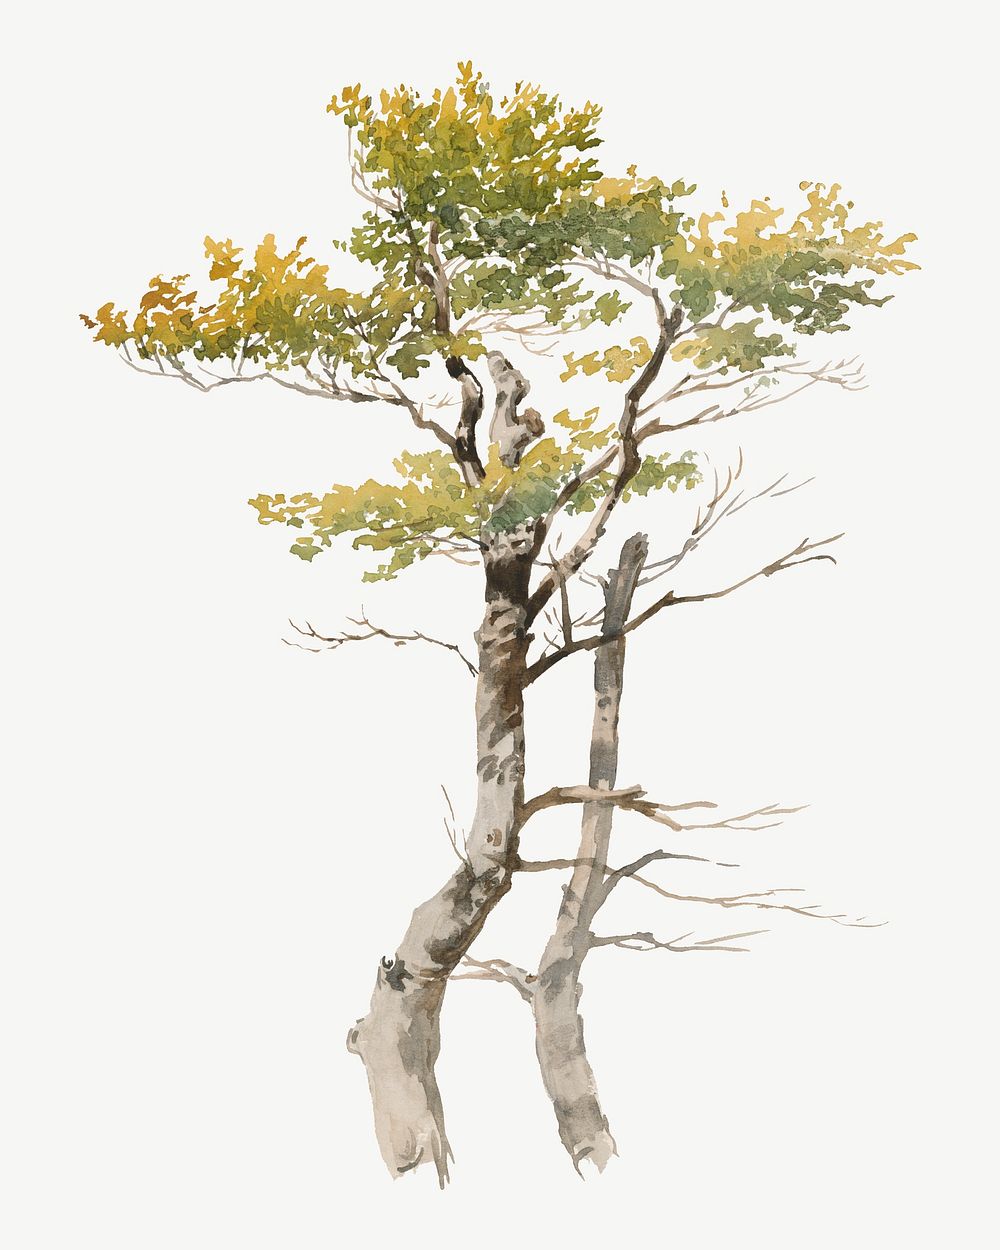 Green tree watercolor illustration element psd. Remixed from Friedrich Carl von Scheidlin artwork, by rawpixel.